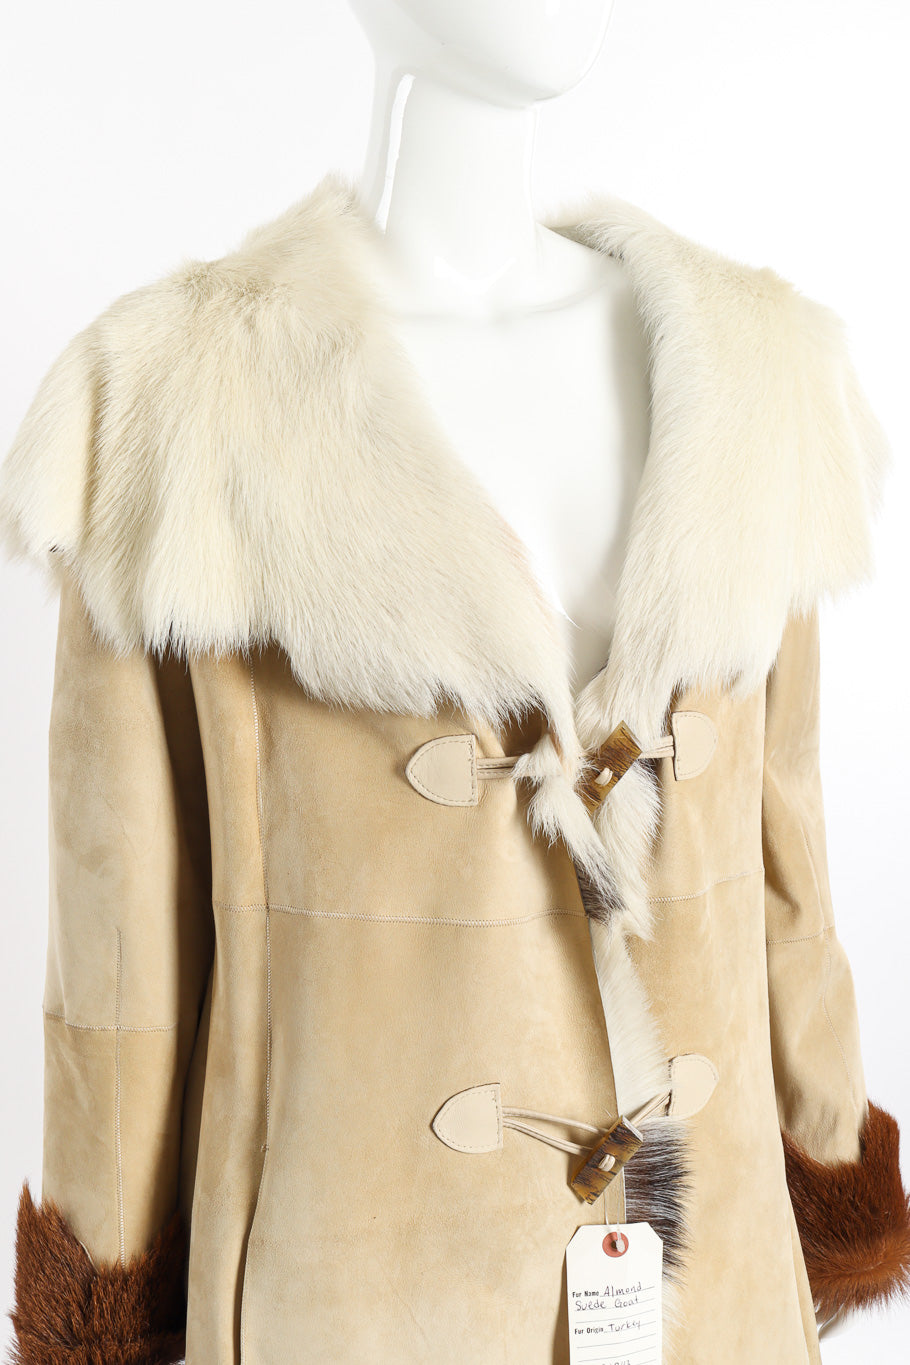 Vintage Zandra Rhodes Suede Goat Fur Coat front on mannequin shawl closeup @recessla